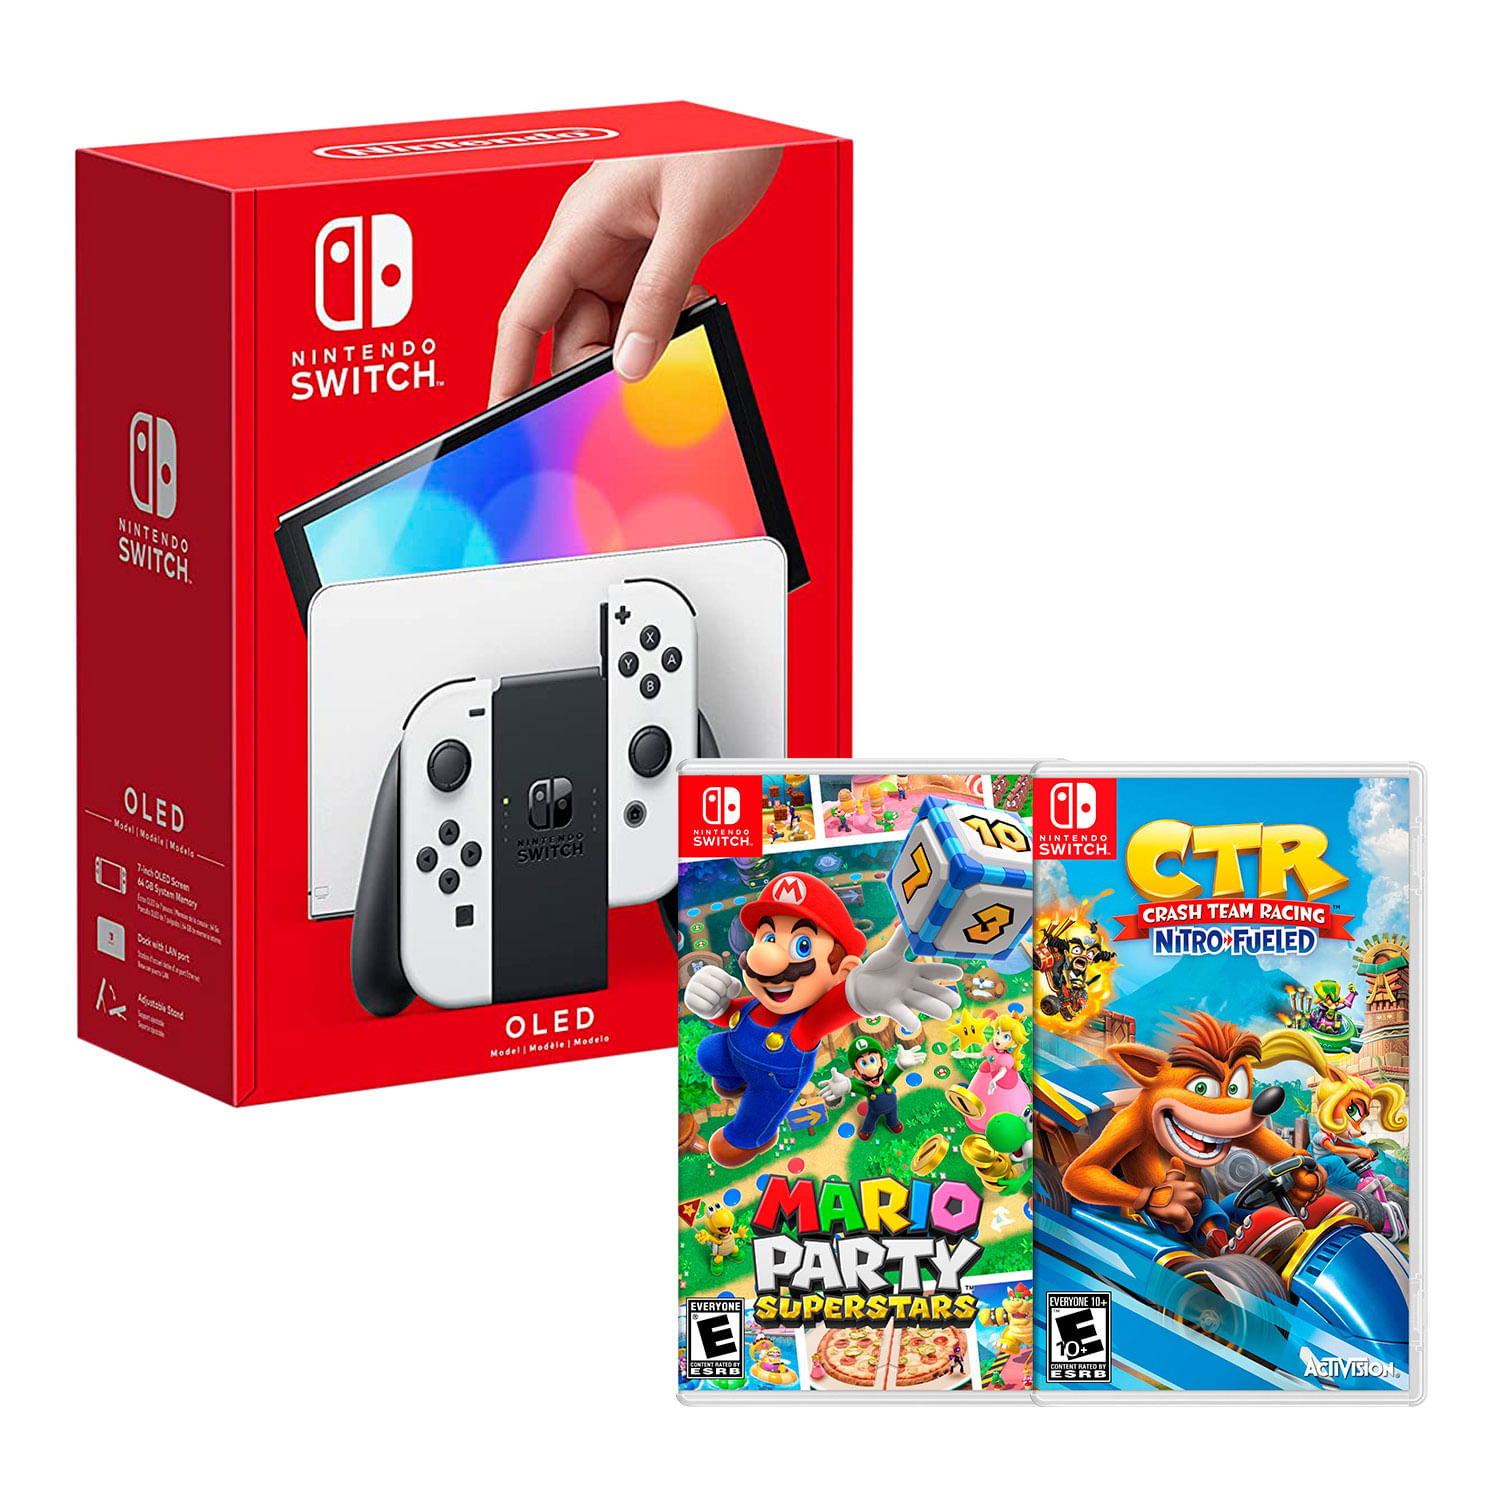 Consola Nintendo Switch Modelo Oled Blanco + Mario Party Superstar + Crash Team Racing